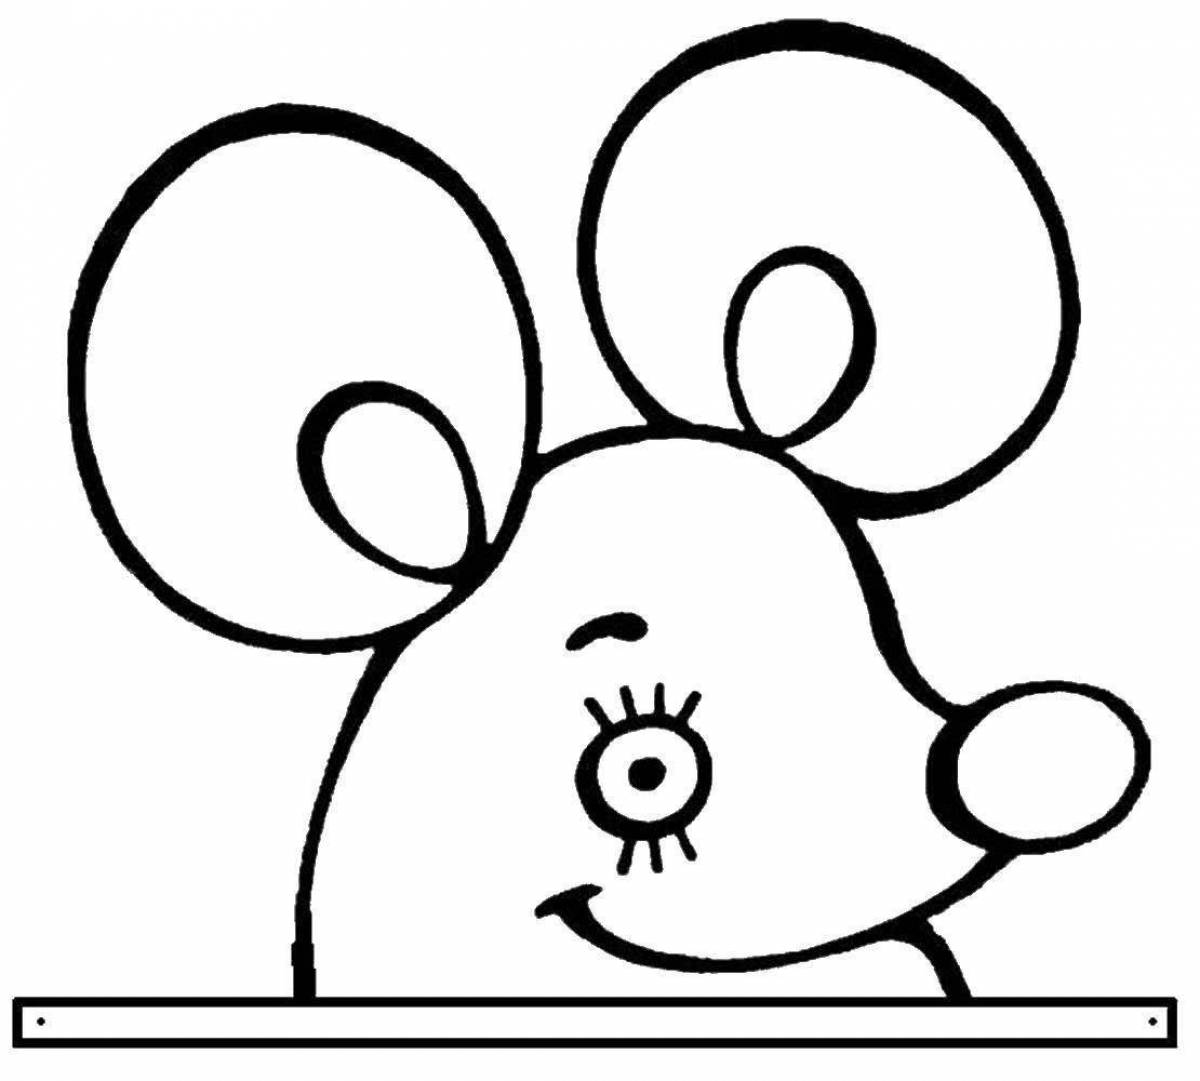 Cute mouse norushka coloring book